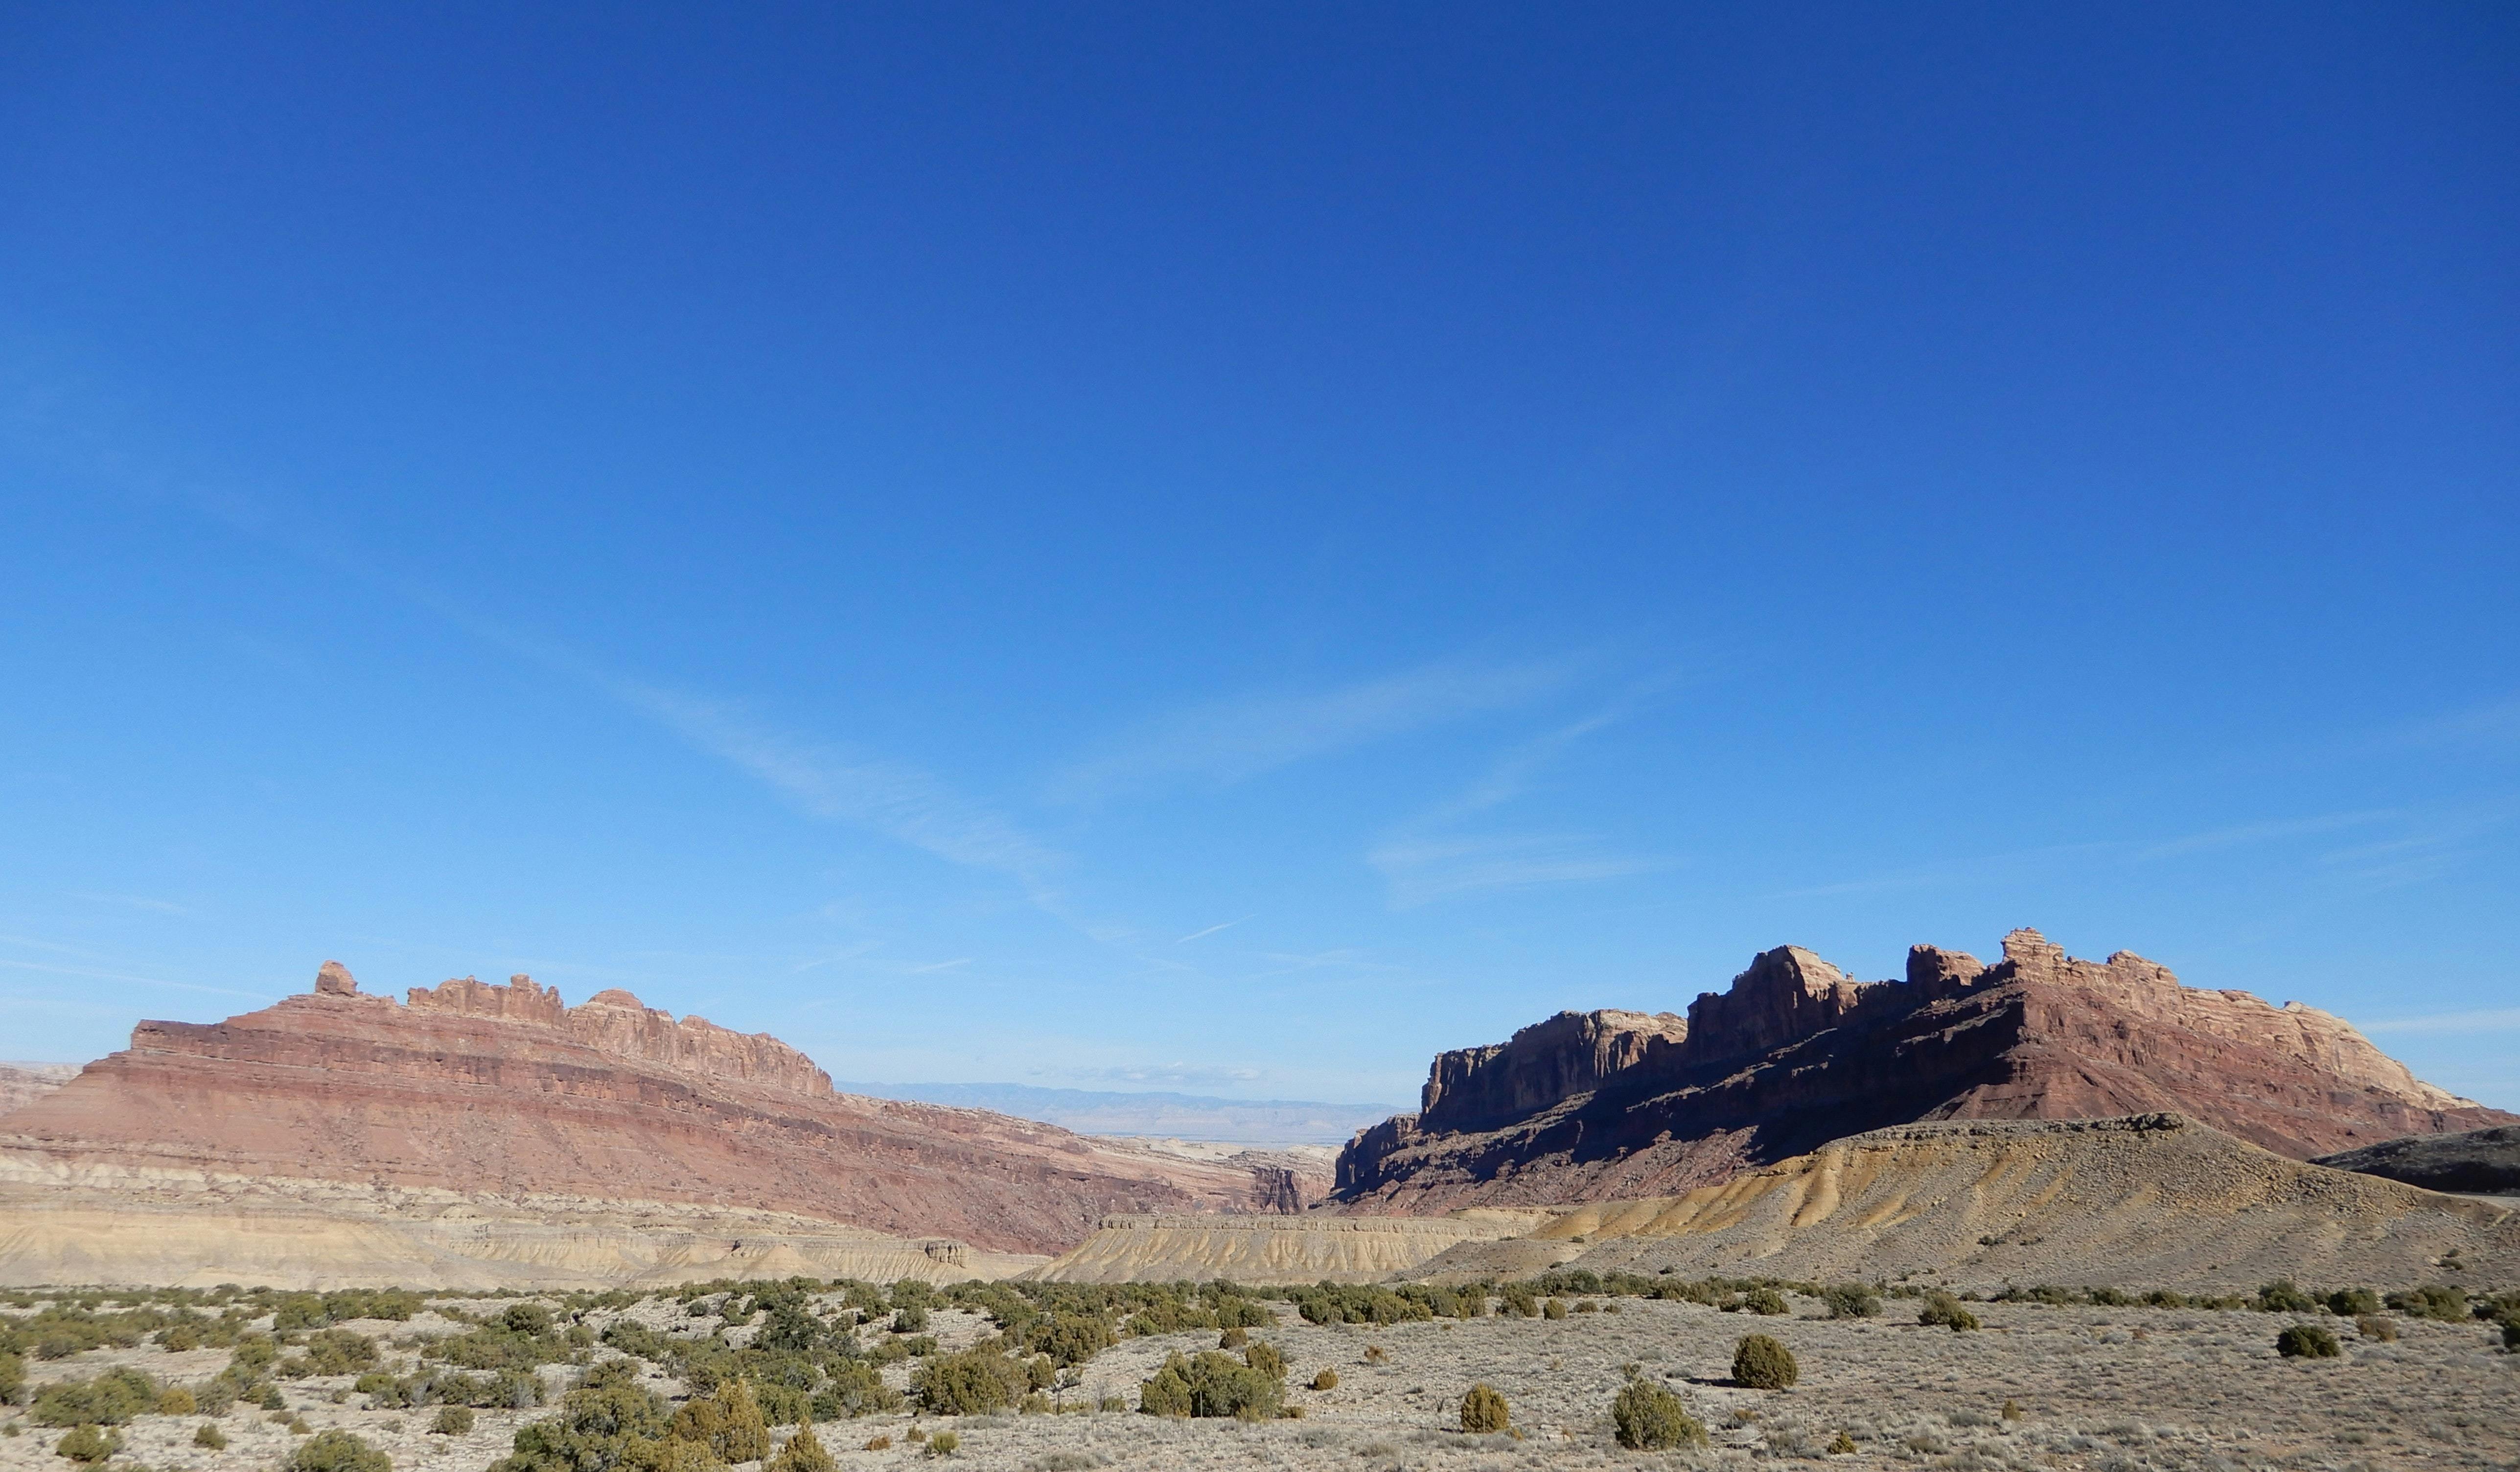 Desert mountains under a brilliant blue sky